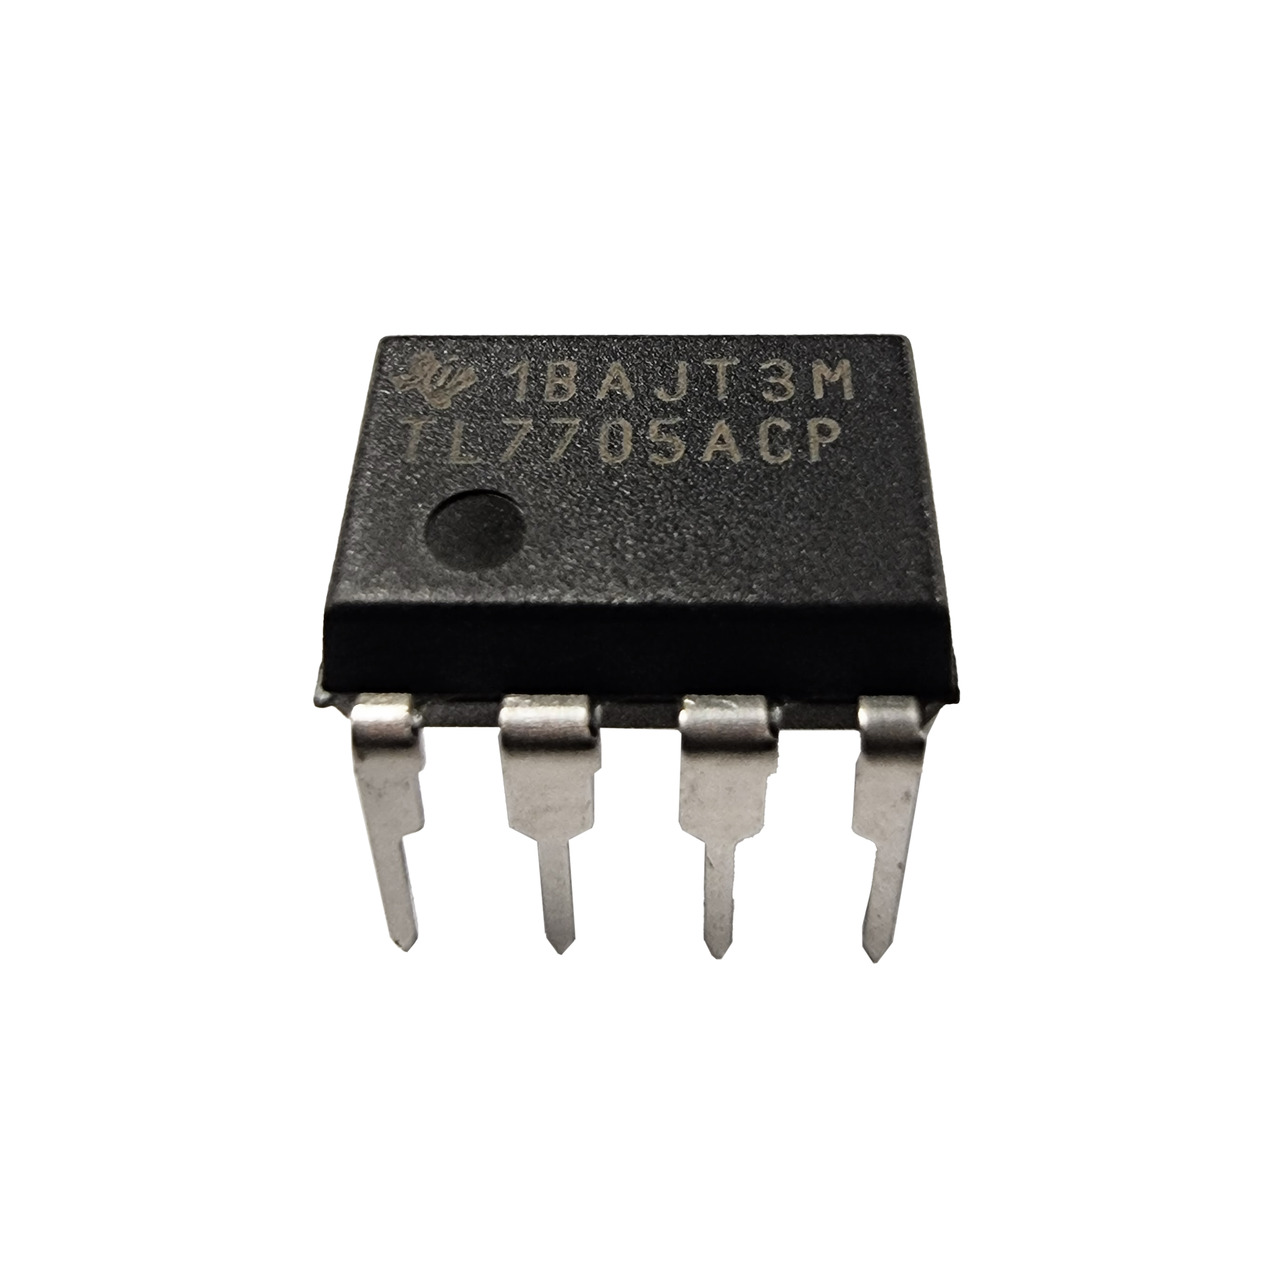 ON Semiconductor Unterspannungssensor MC33064P-5- 4-54-7 V- TO92 unter Komponenten